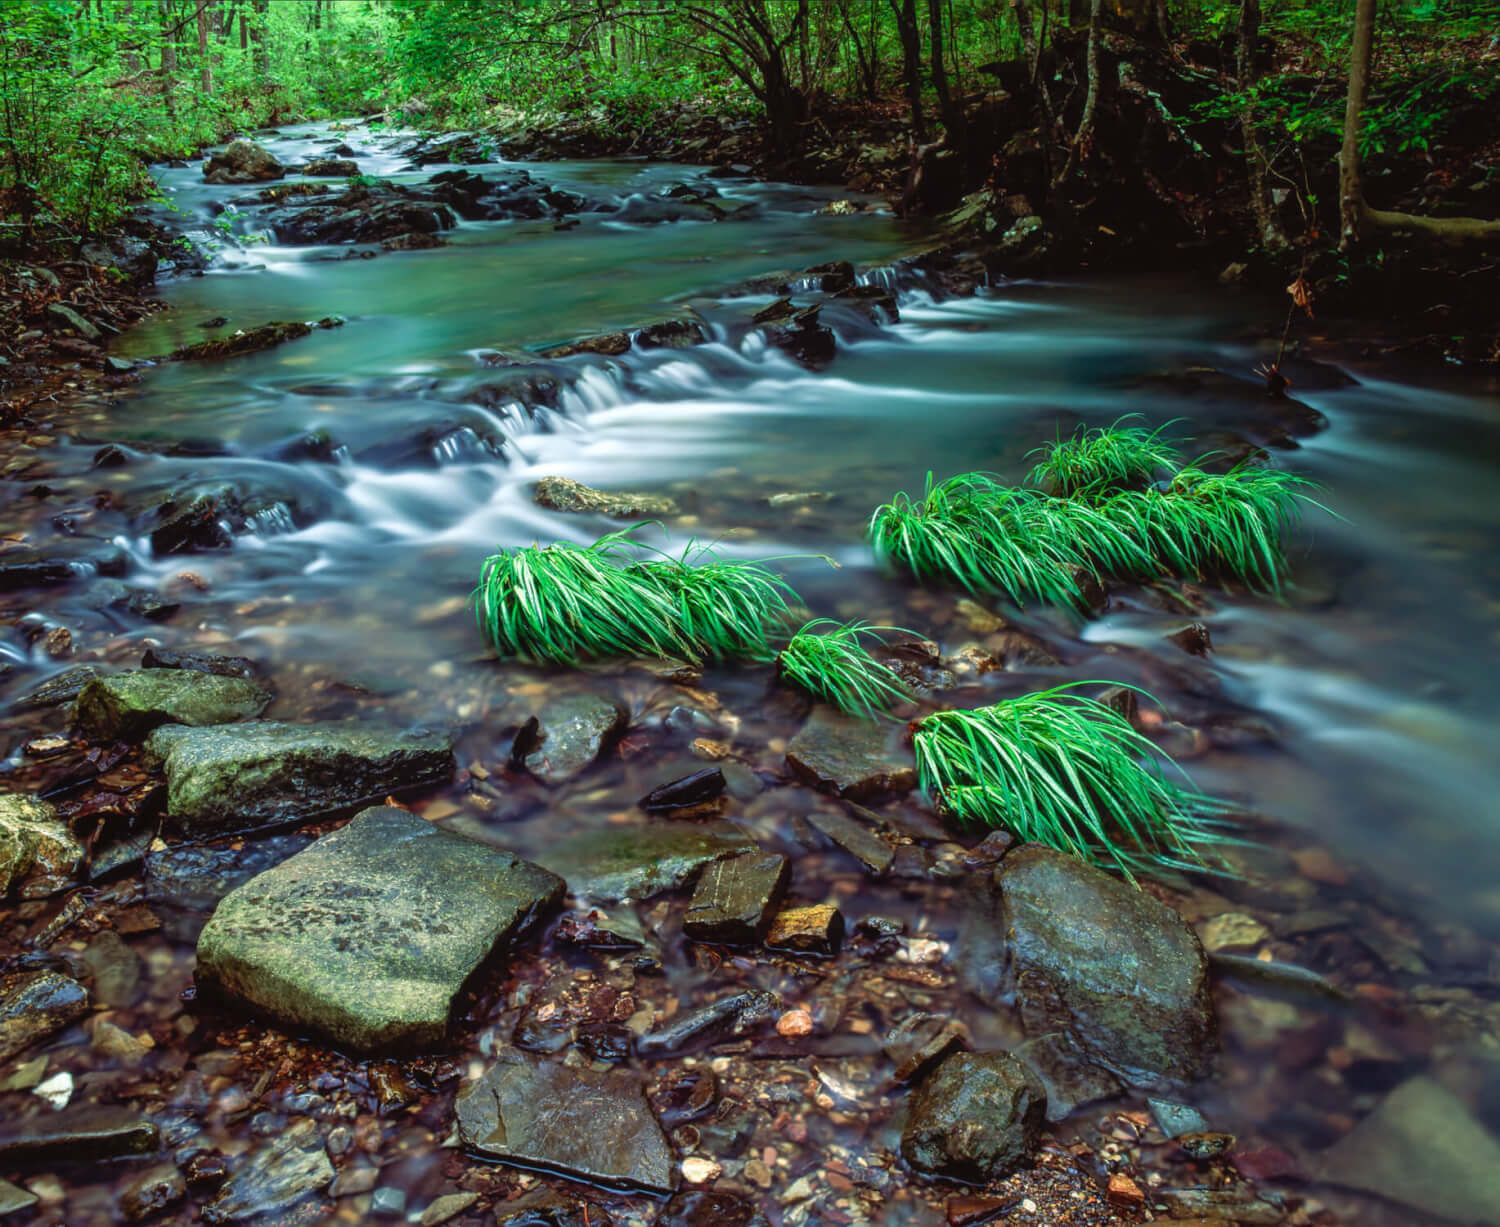 Creek and Grass - Fuji Velvia 50, Mamiya RB67, 65mm lens